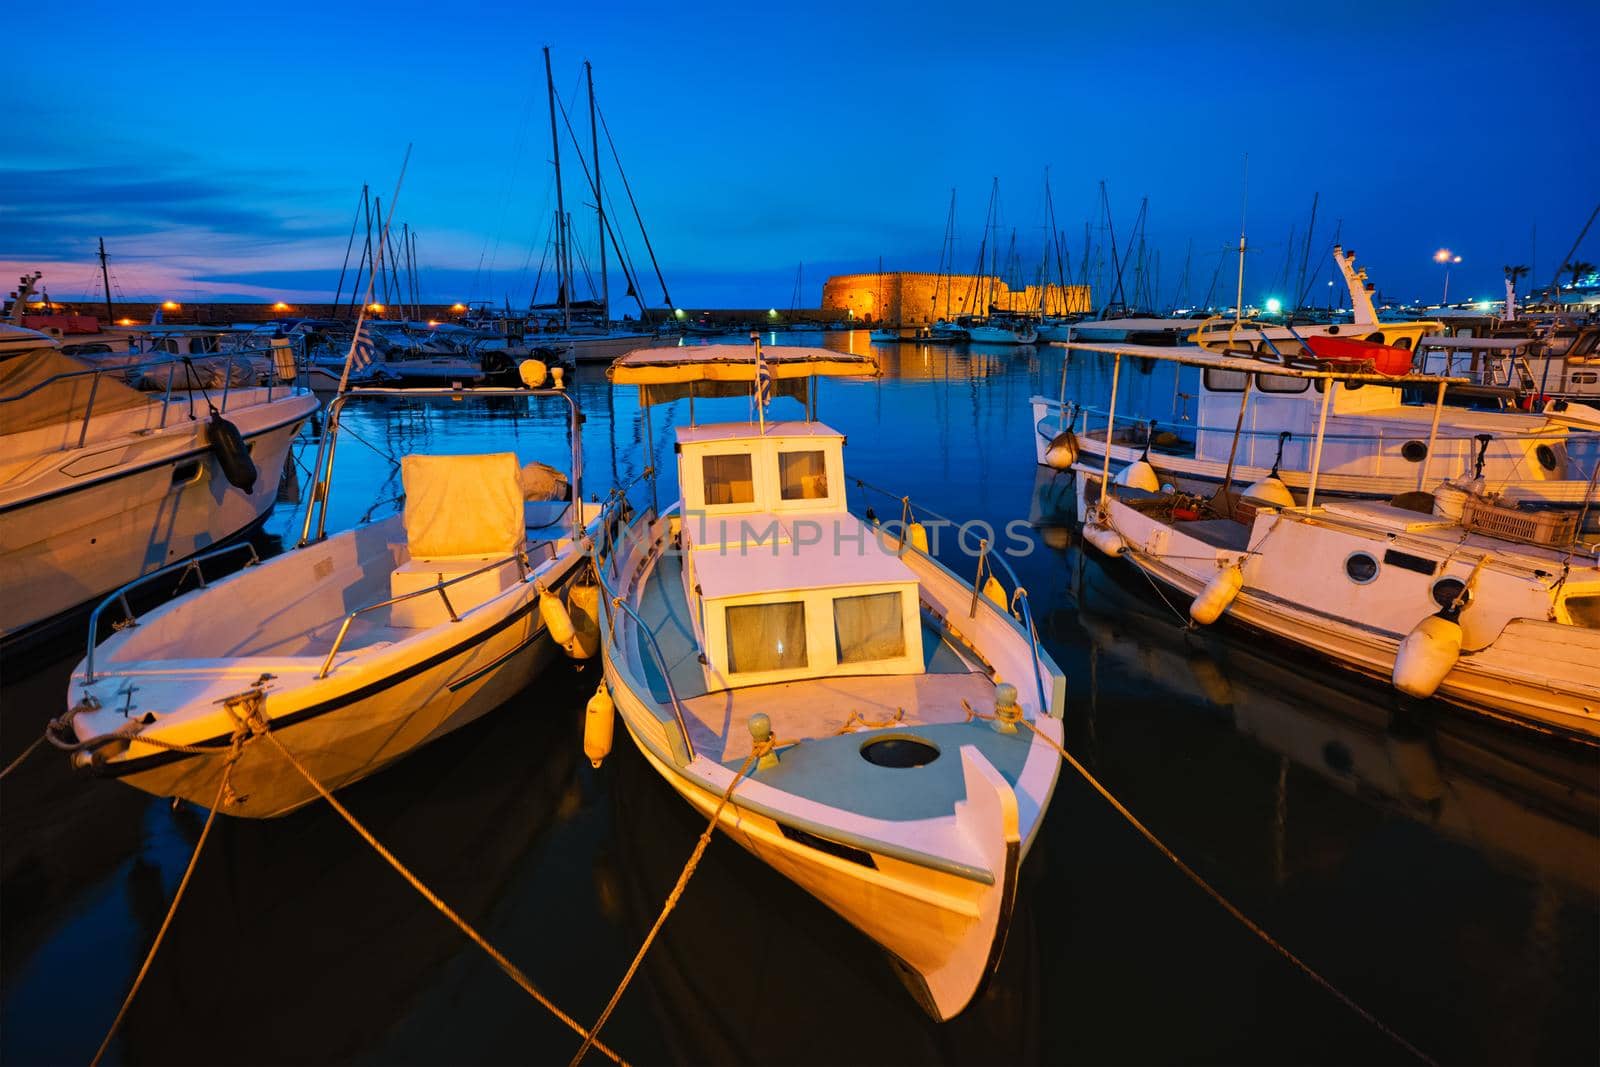 Venetian Fort in Heraklion and moored fishing boats, Crete Island, Greece by dimol